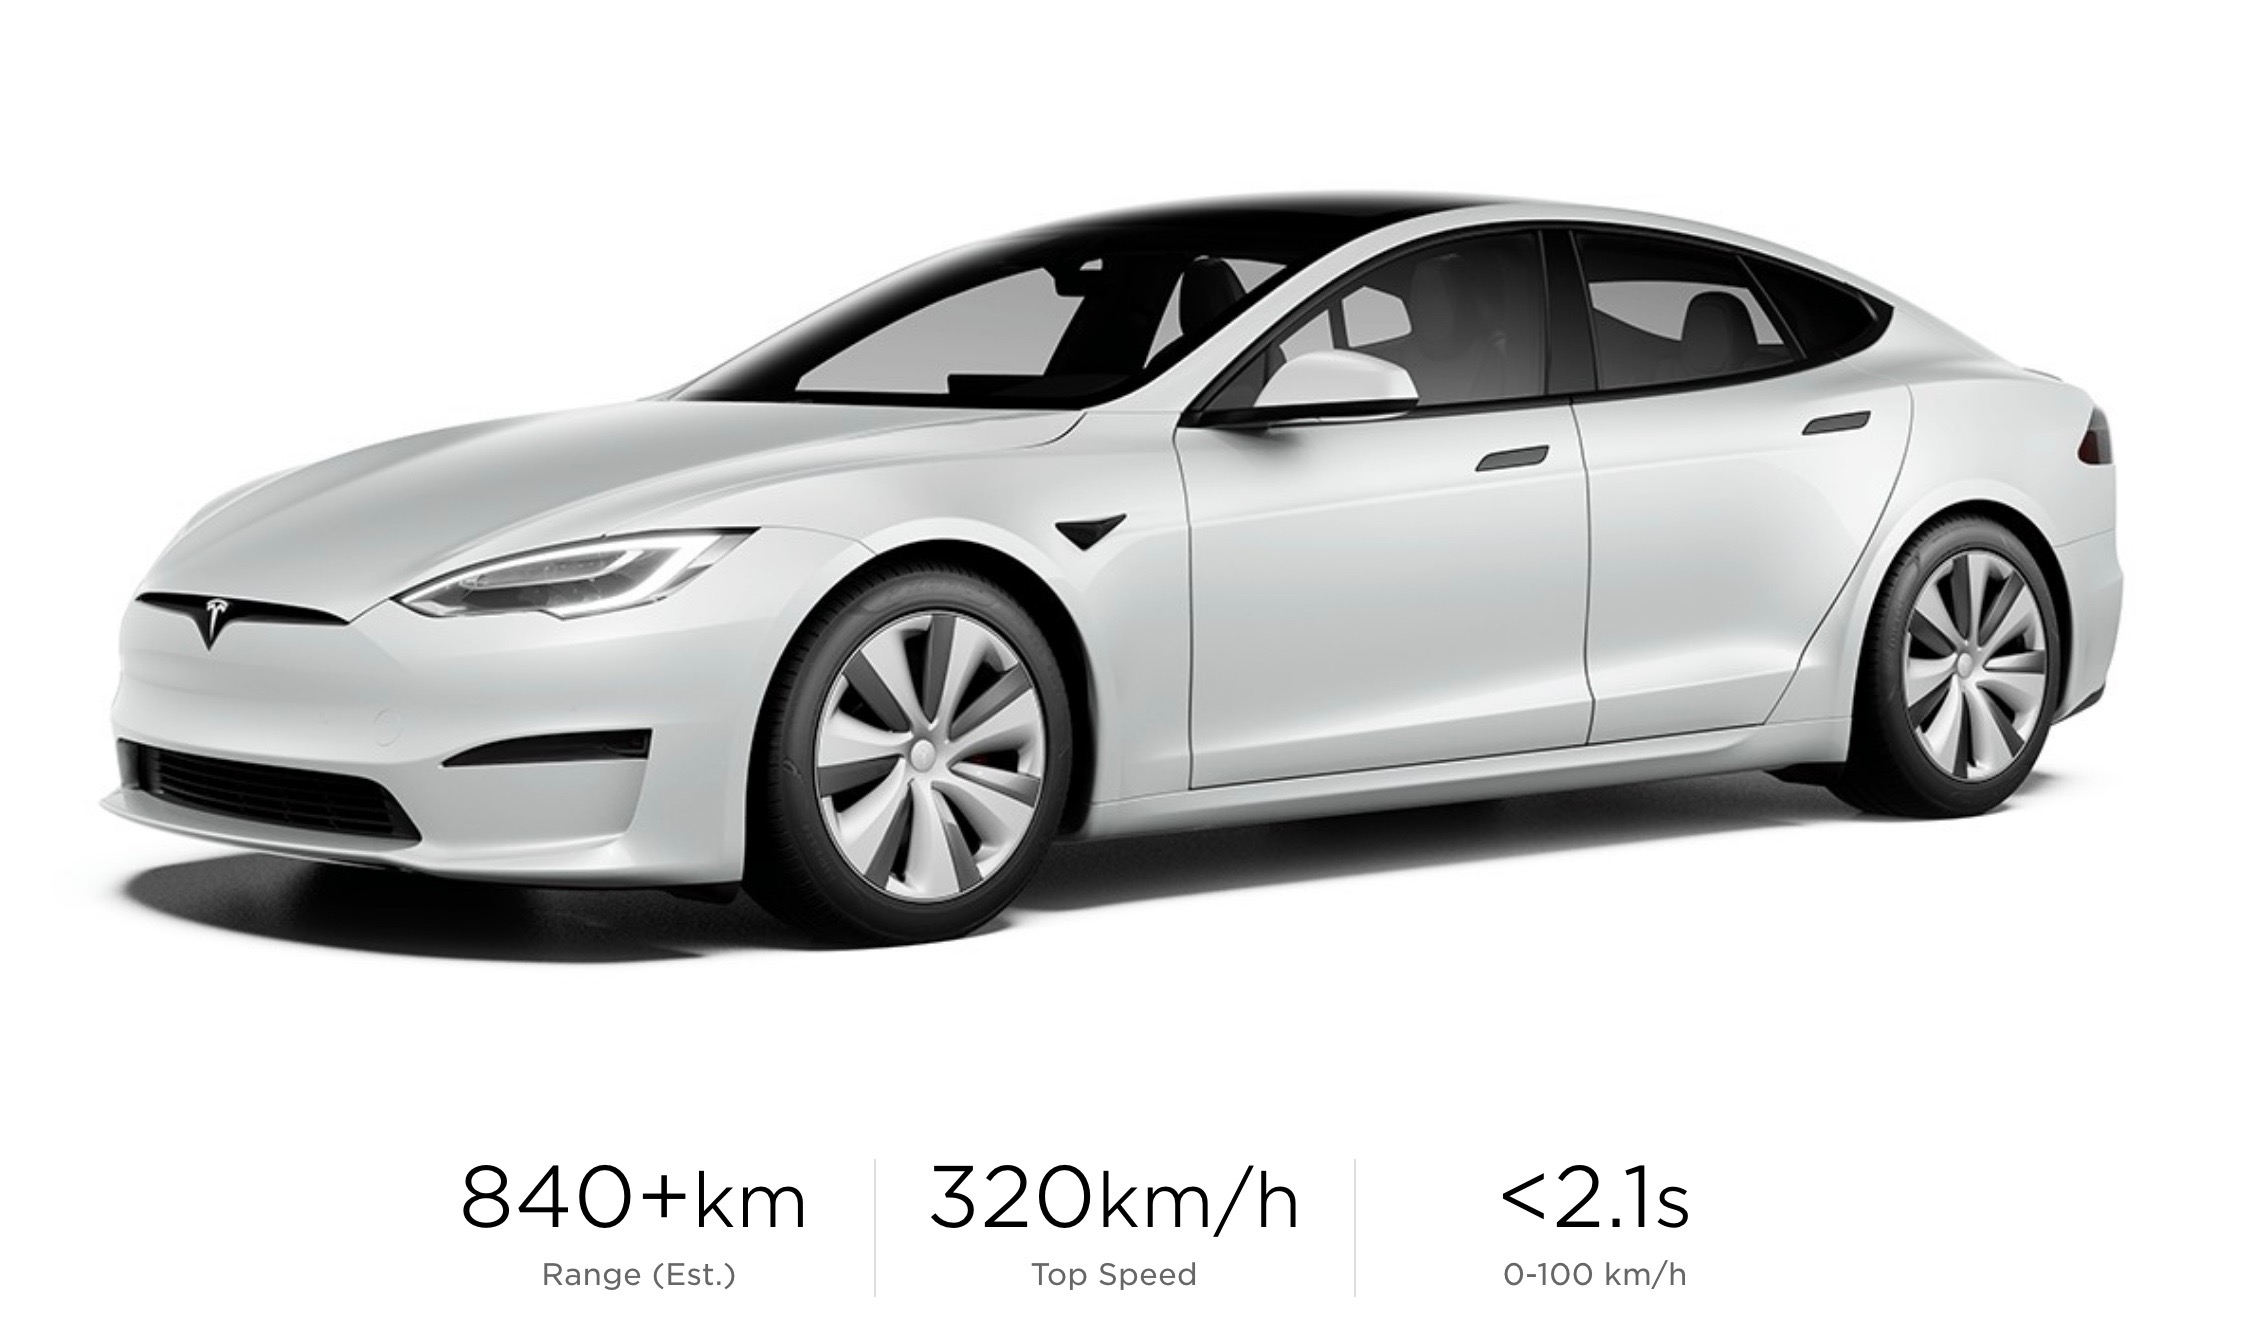 2021 Model S revealed: 0-100 in 2.1, 1/4 mile in < seconds - PerformanceDrive